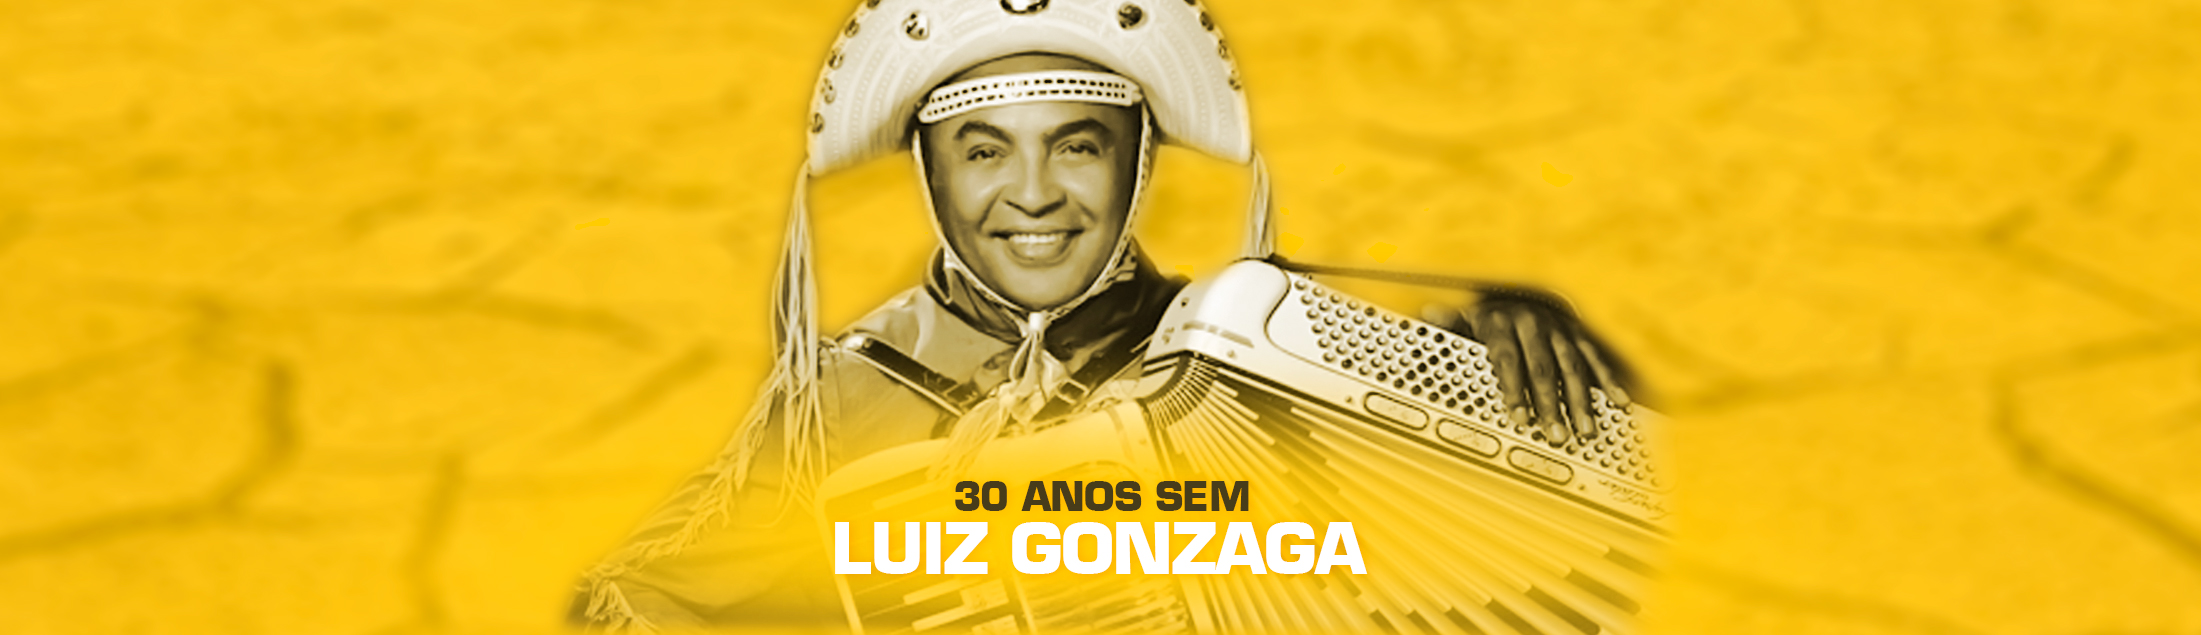 30 anos sem Luiz Gonzaga